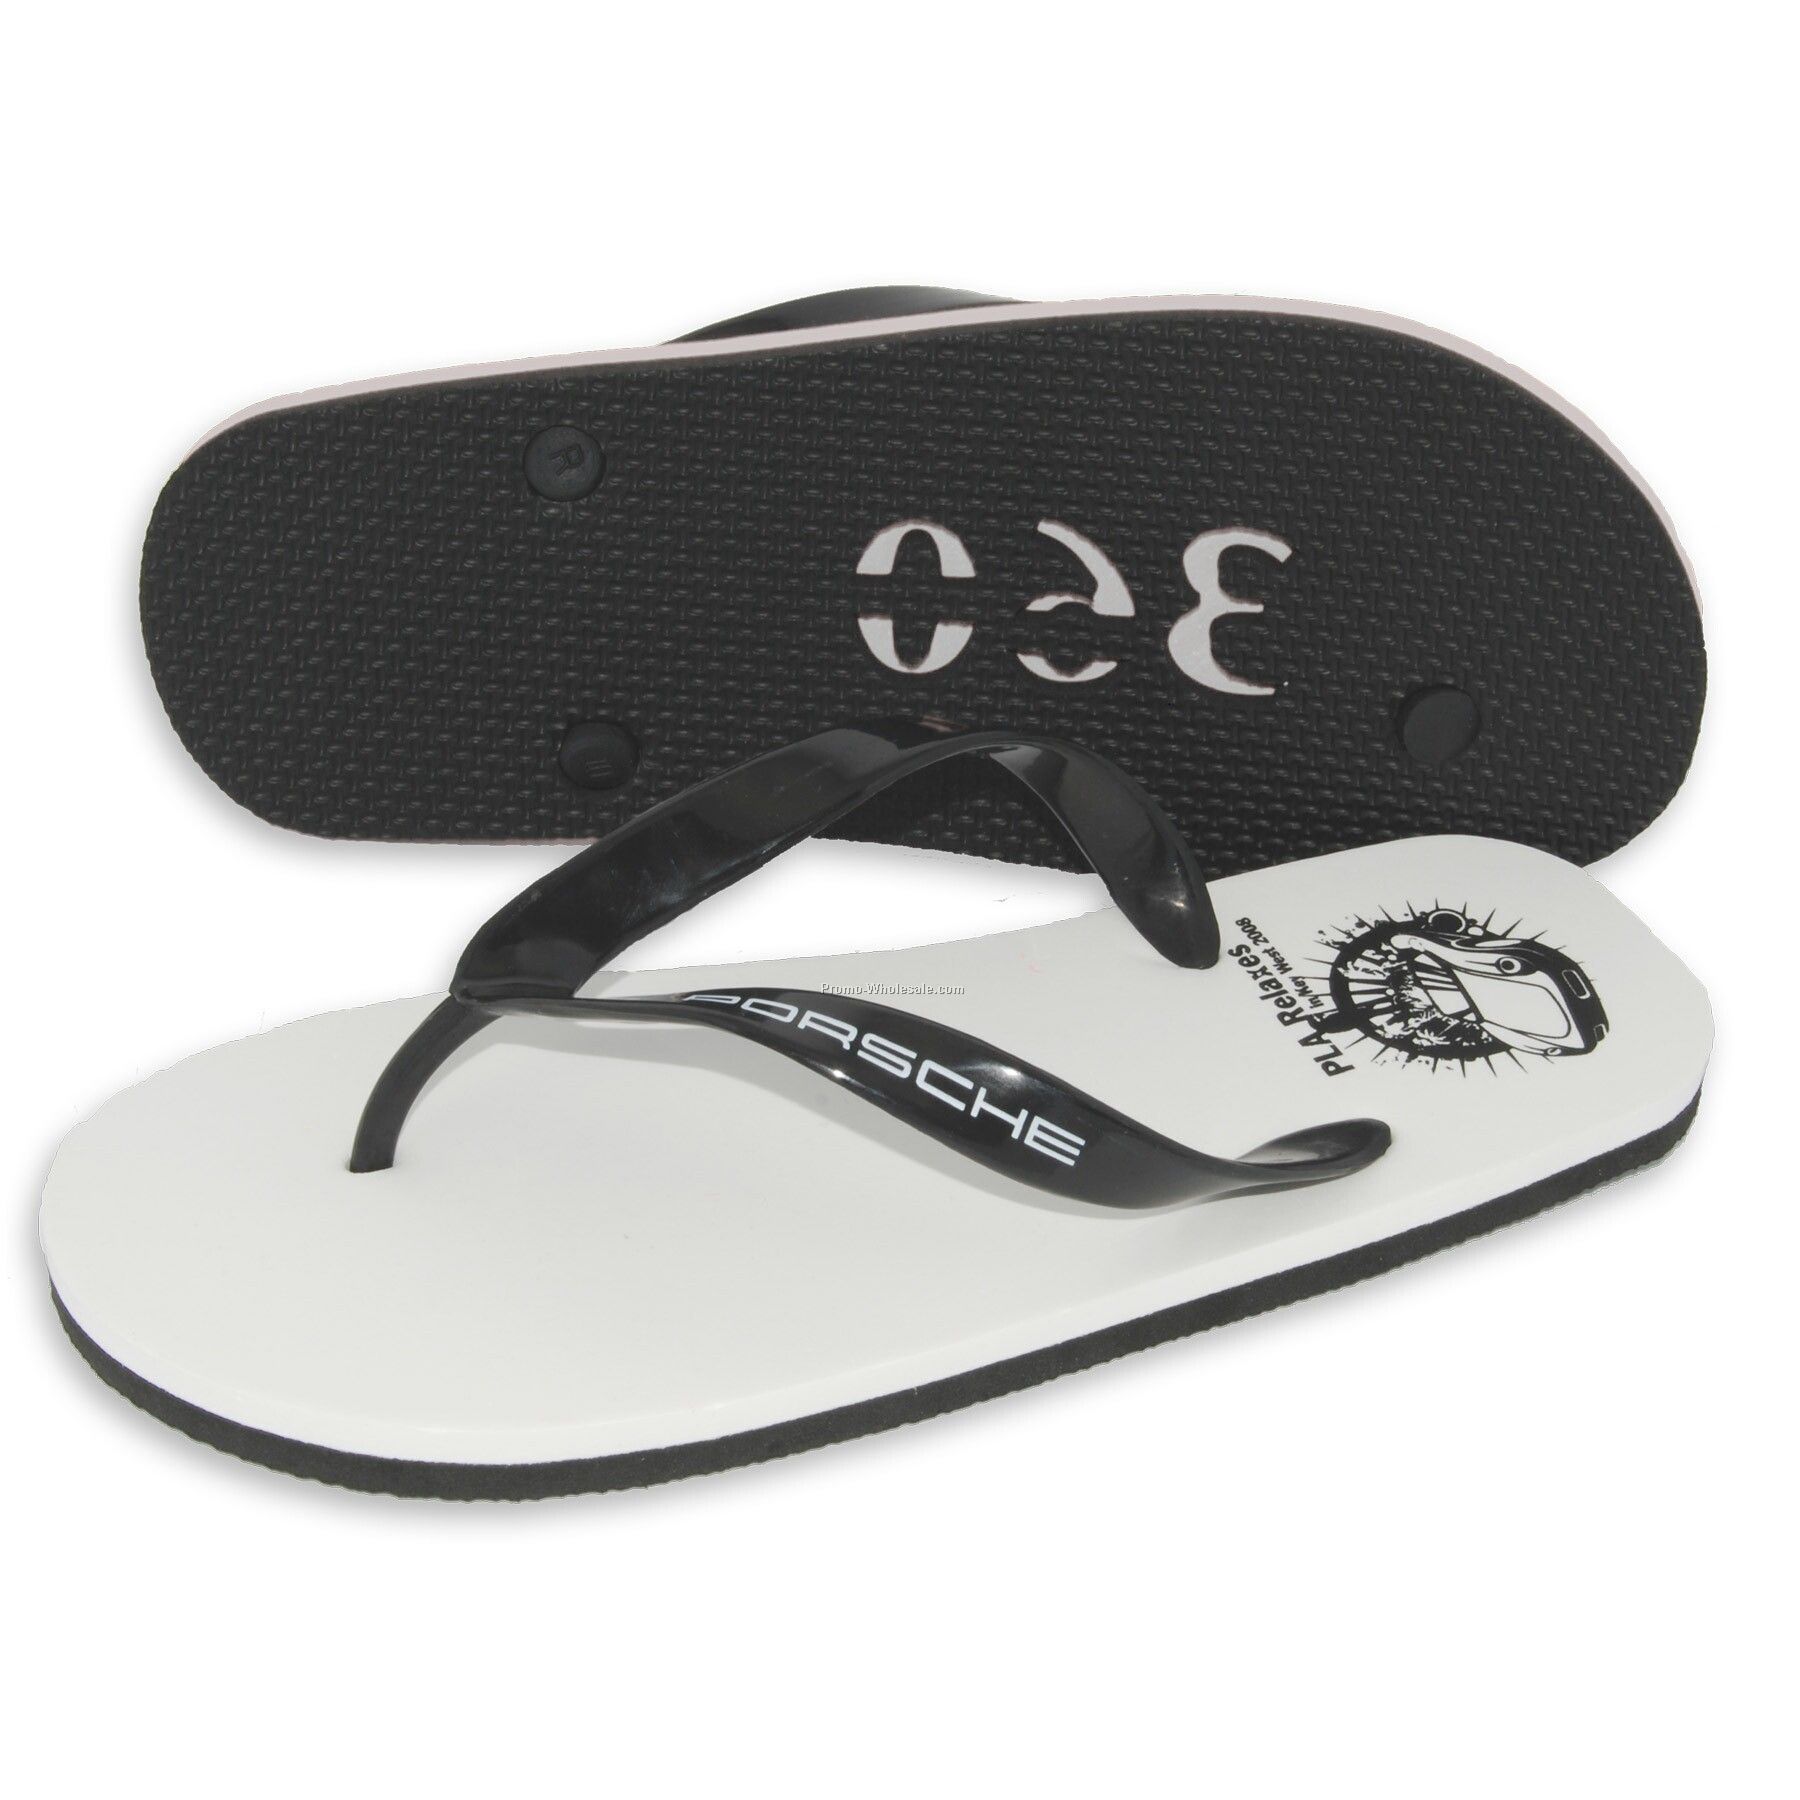 The Newport Sandals - Zori Style Flip Flop W/ 14 Mm 2-layer Sole (Domestic)